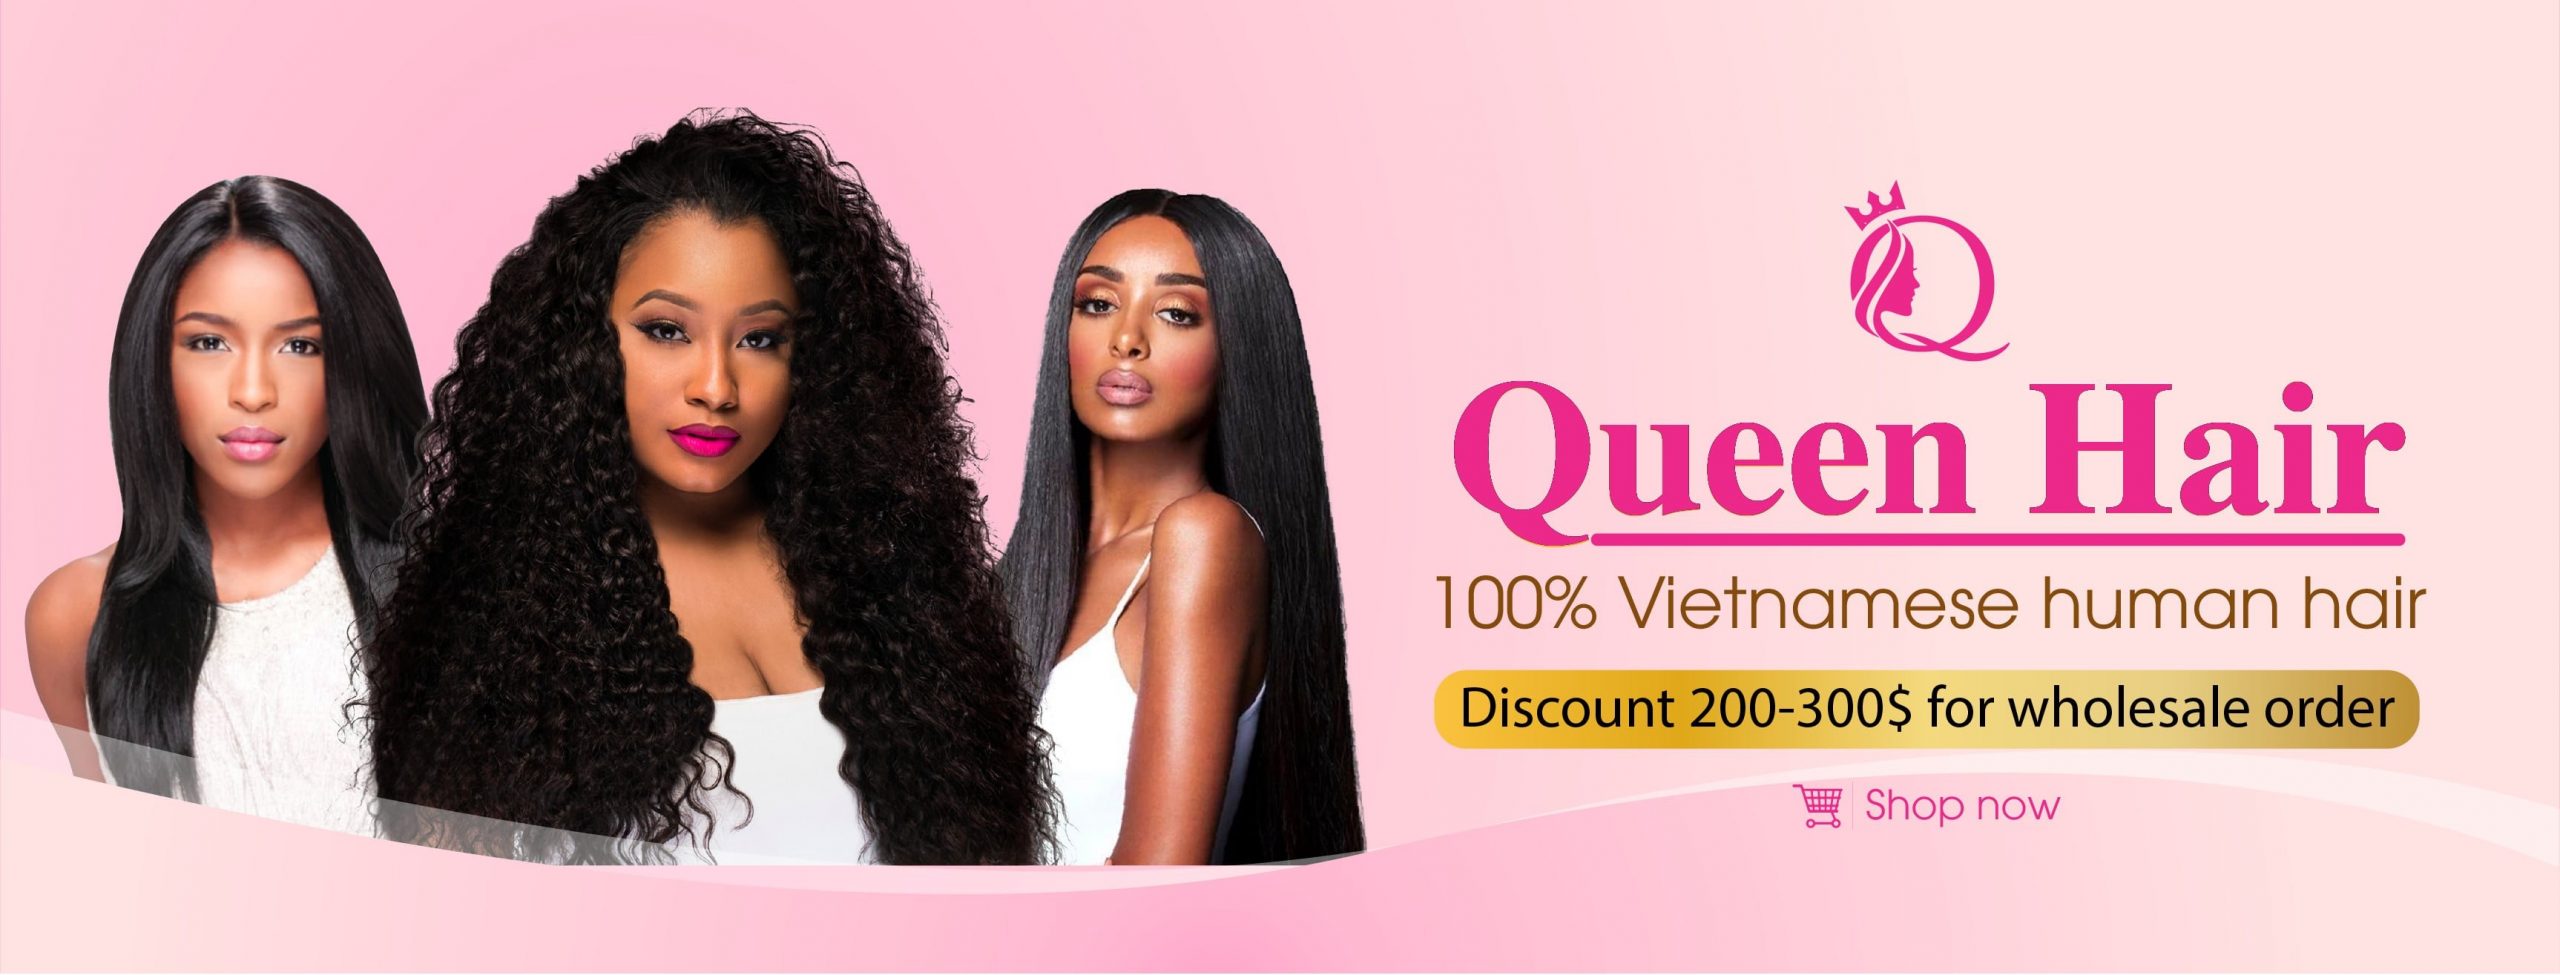 virgin-hair-vietnam-reviews-a-notable-topic-for-hair-vendors-16